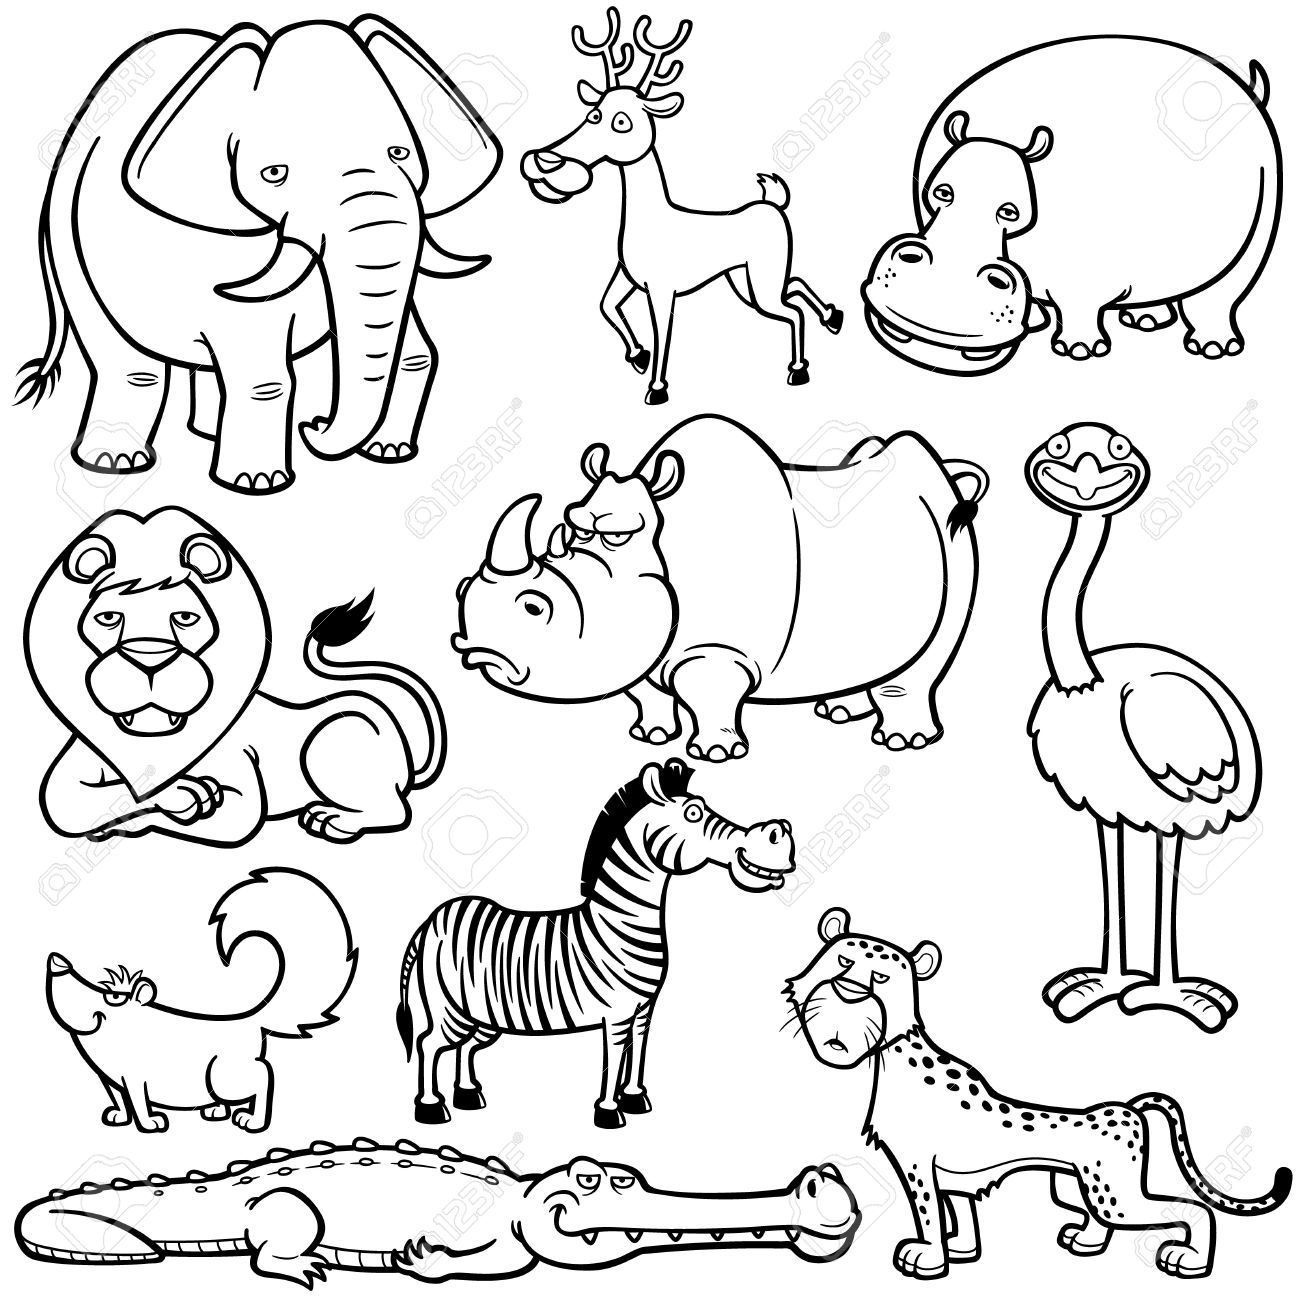 colouring wild animals wild animal coloring pages best coloring pages for kids animals wild colouring 